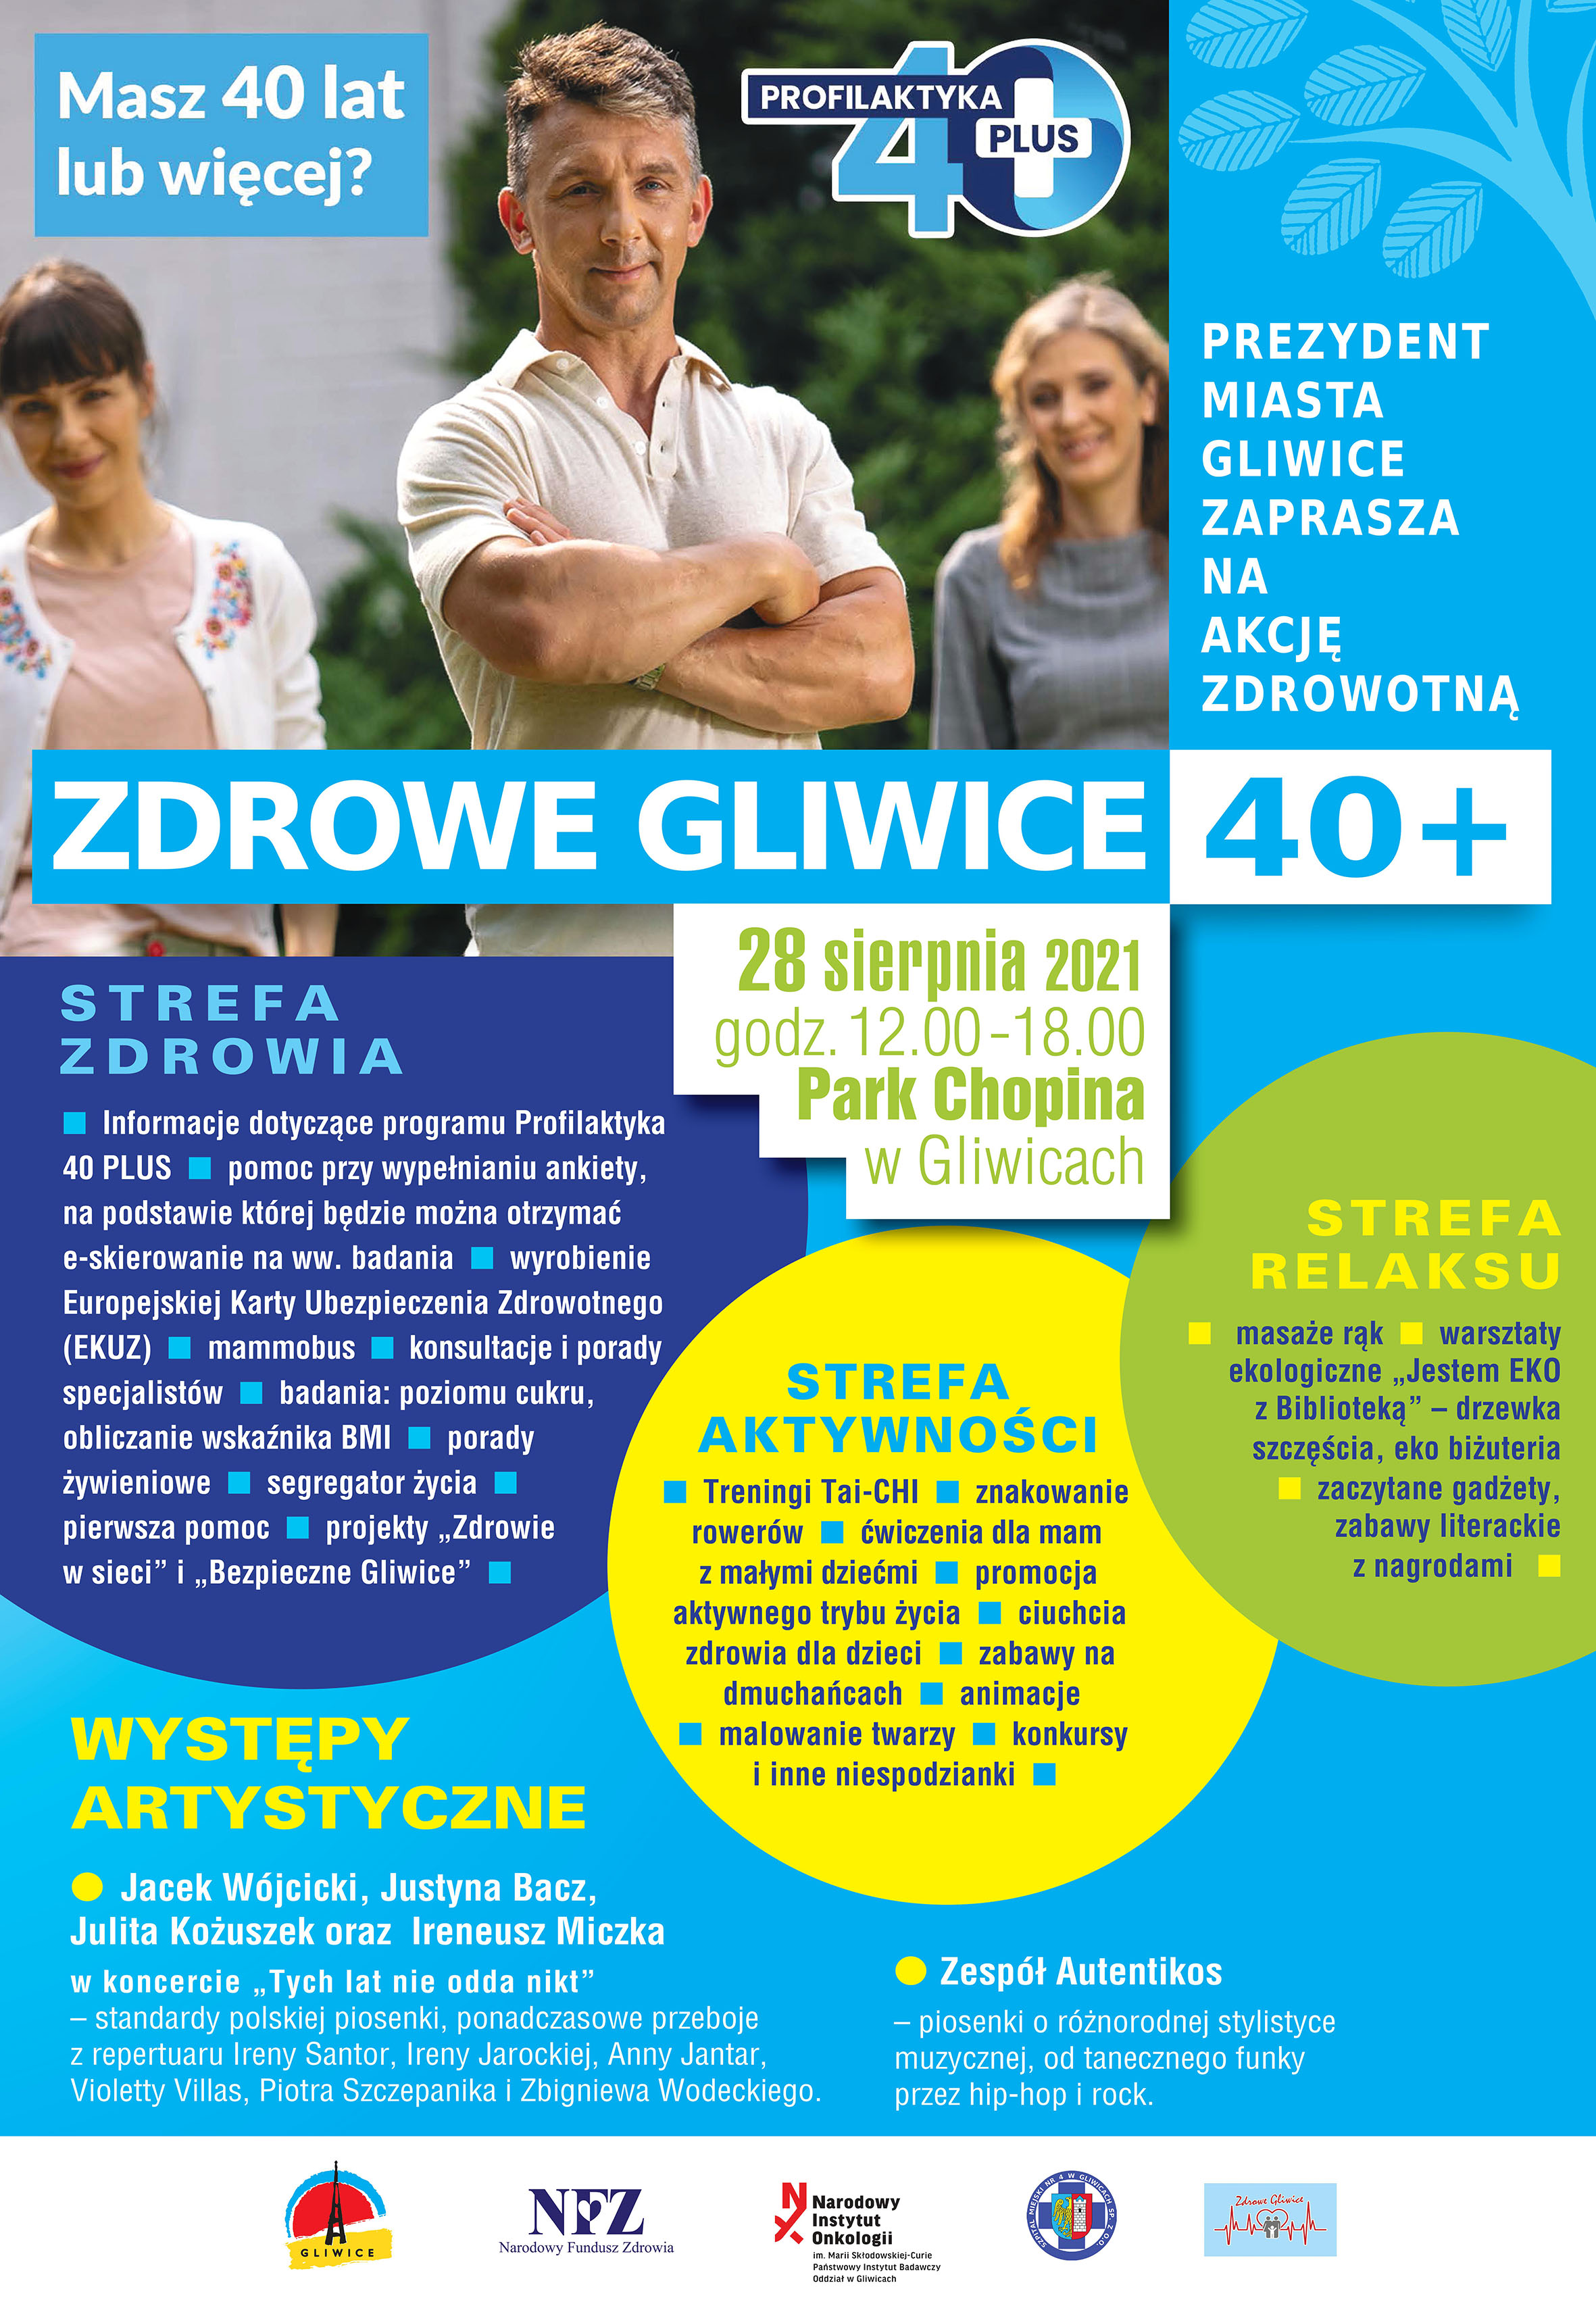 Zdrowe Gliwice 40+